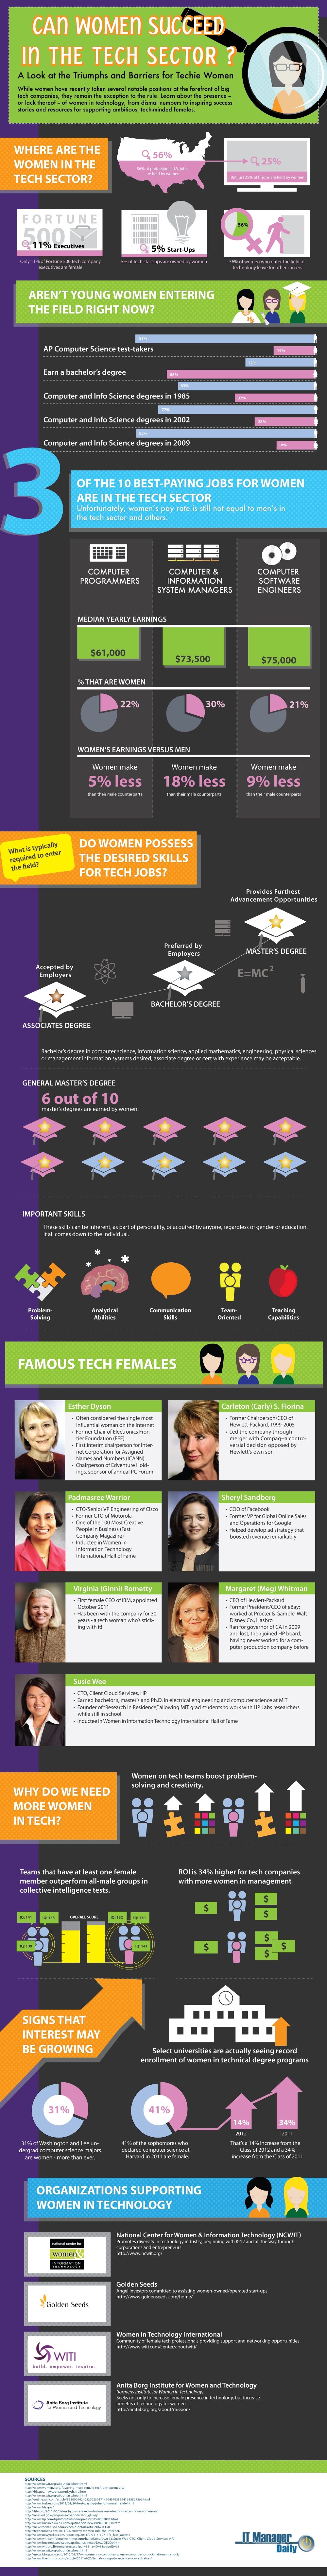 Women in tech infographic